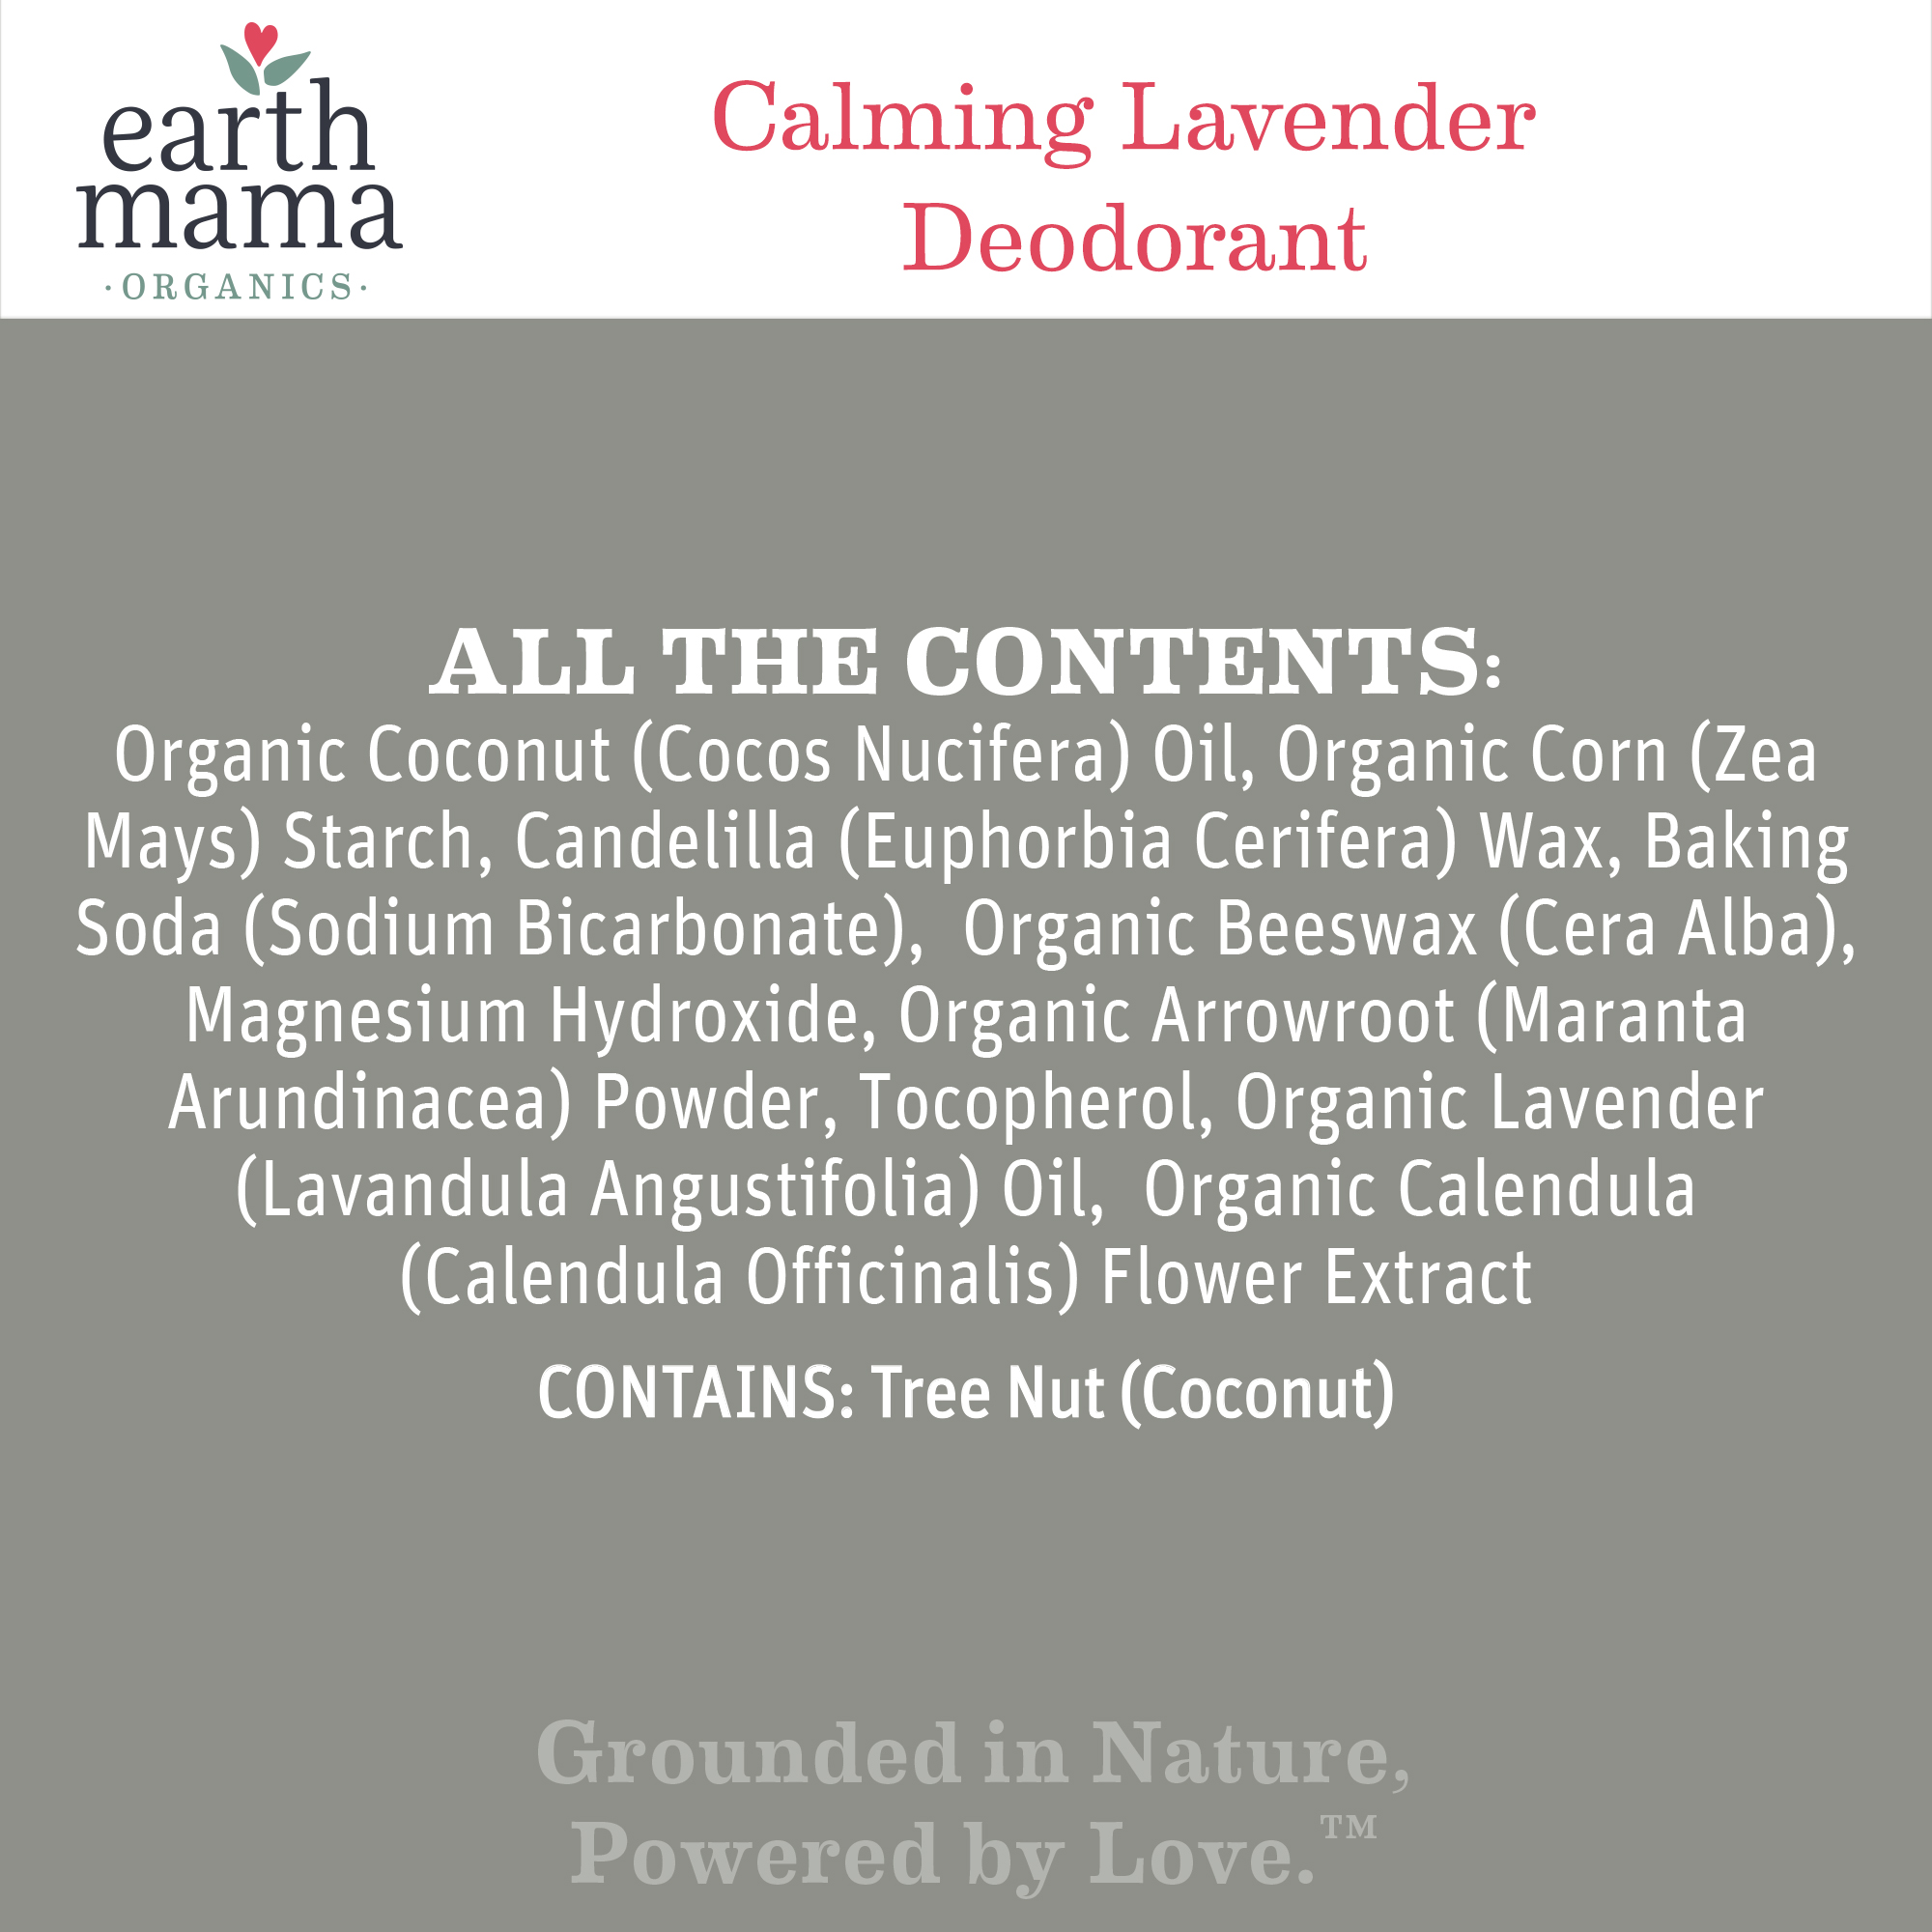 Earth Mama Calming Lavender Deodorant - image 3 of 4